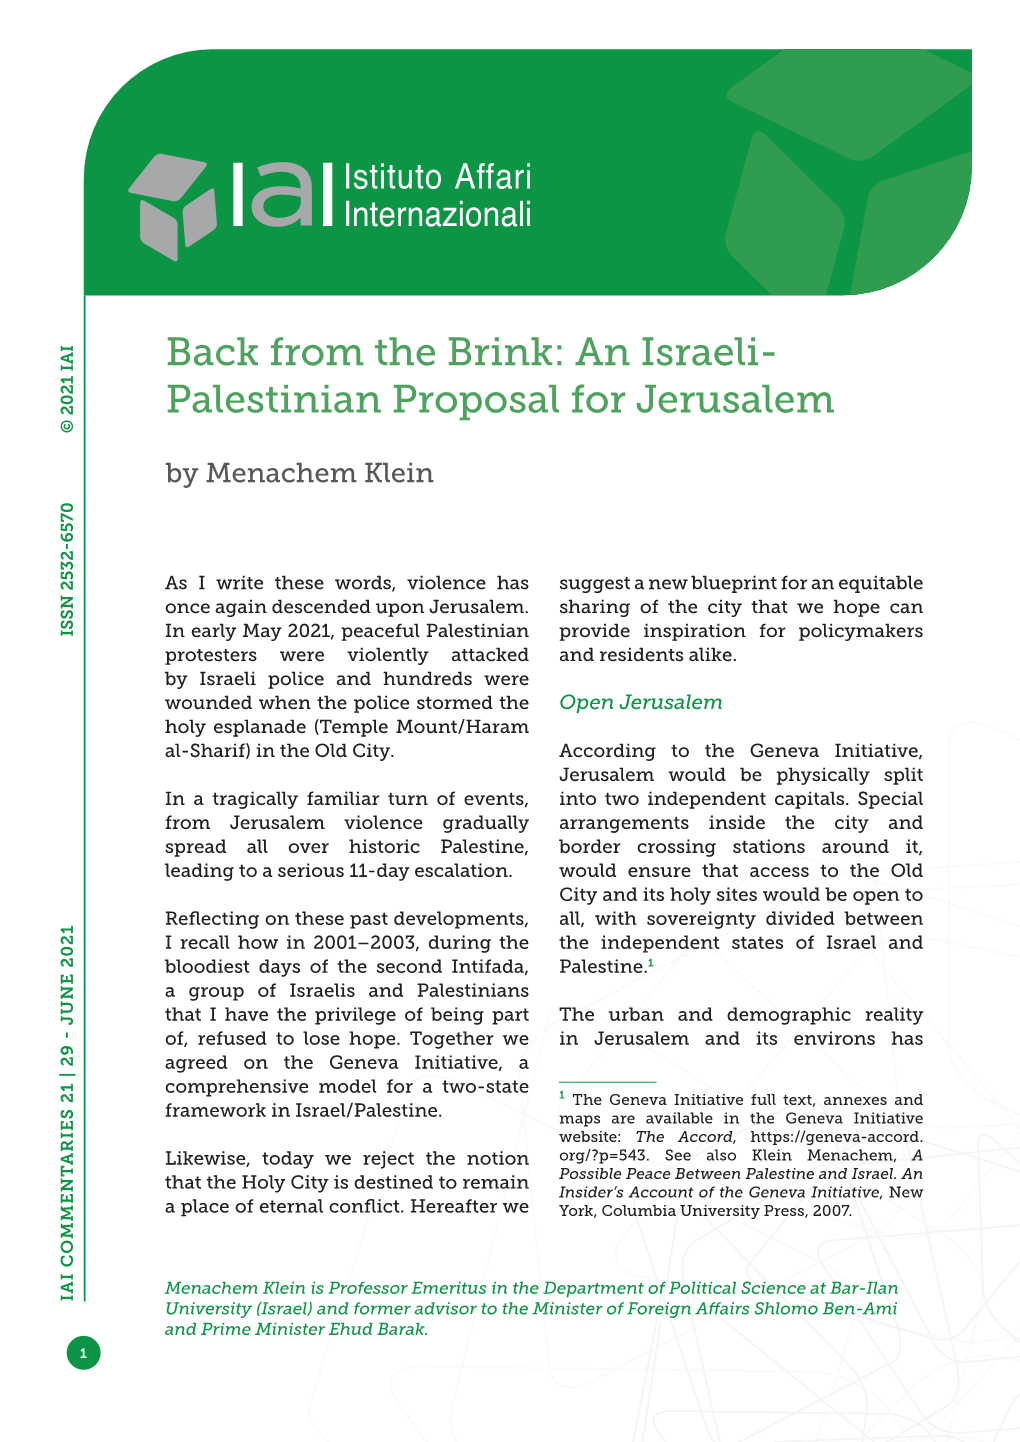 An Israeli-Palestinian Proposal for Jerusalem